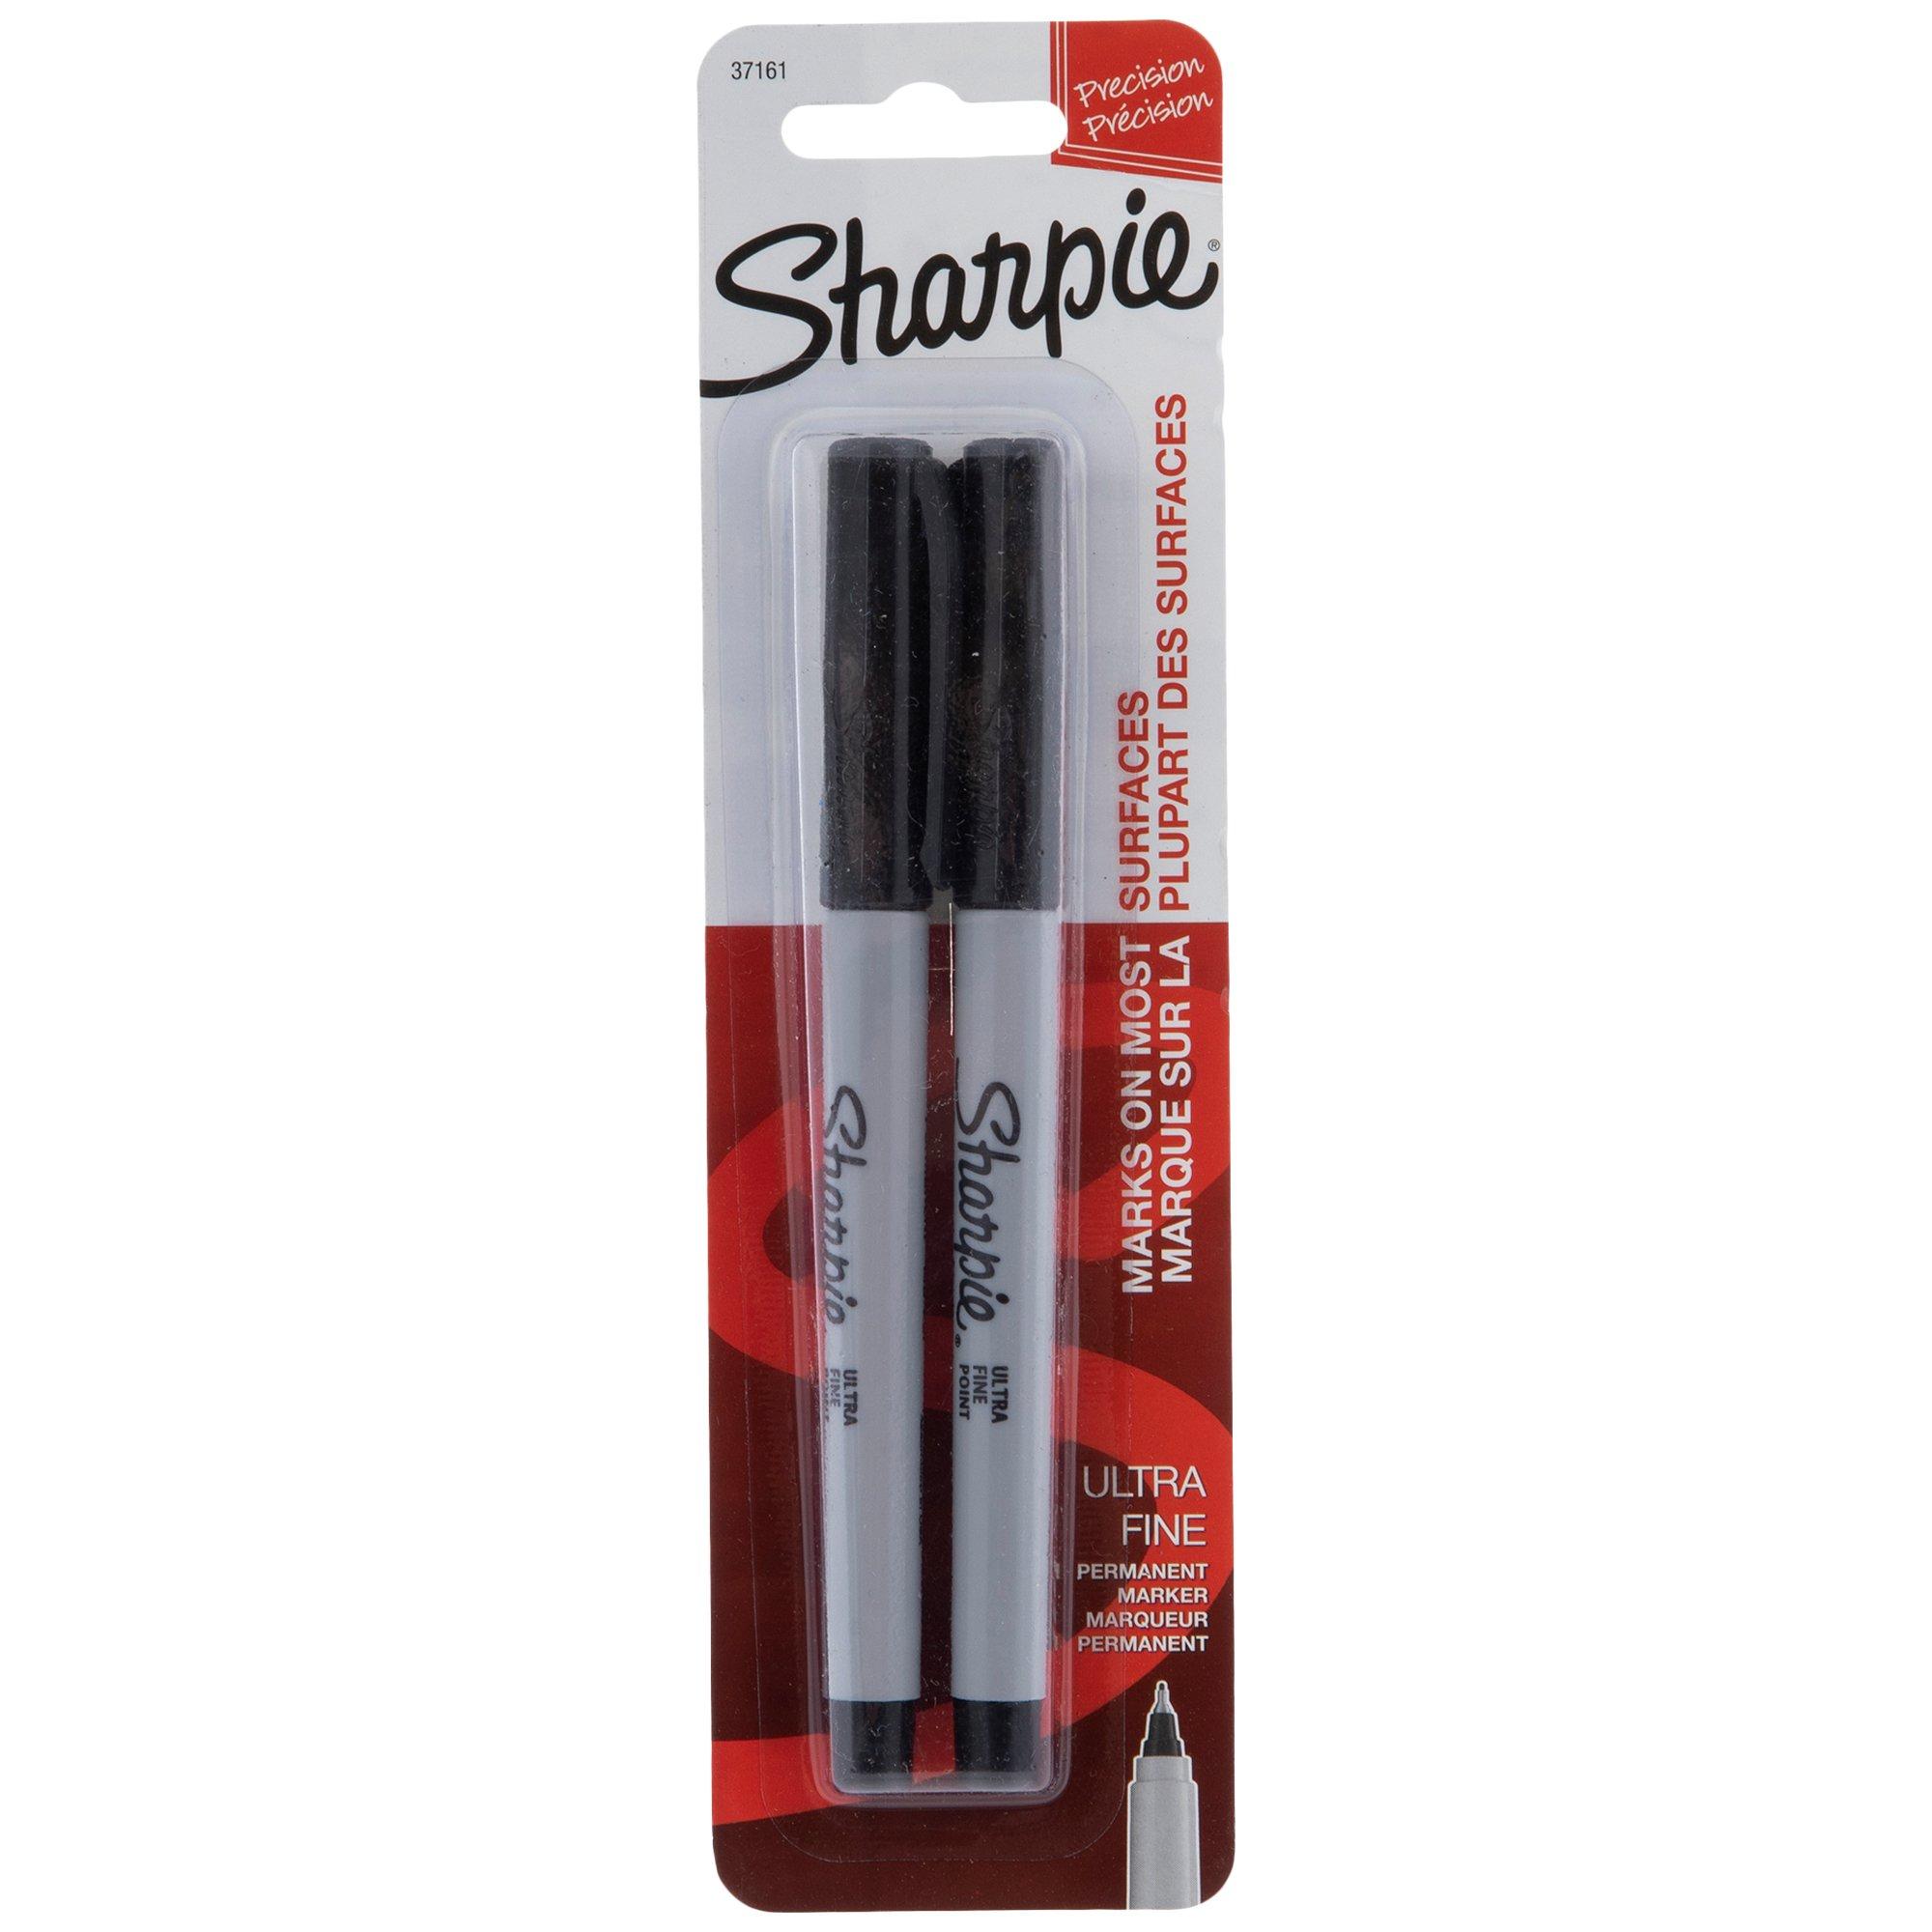 Sharpie Ultra Fine Marker Black - The School Box Inc